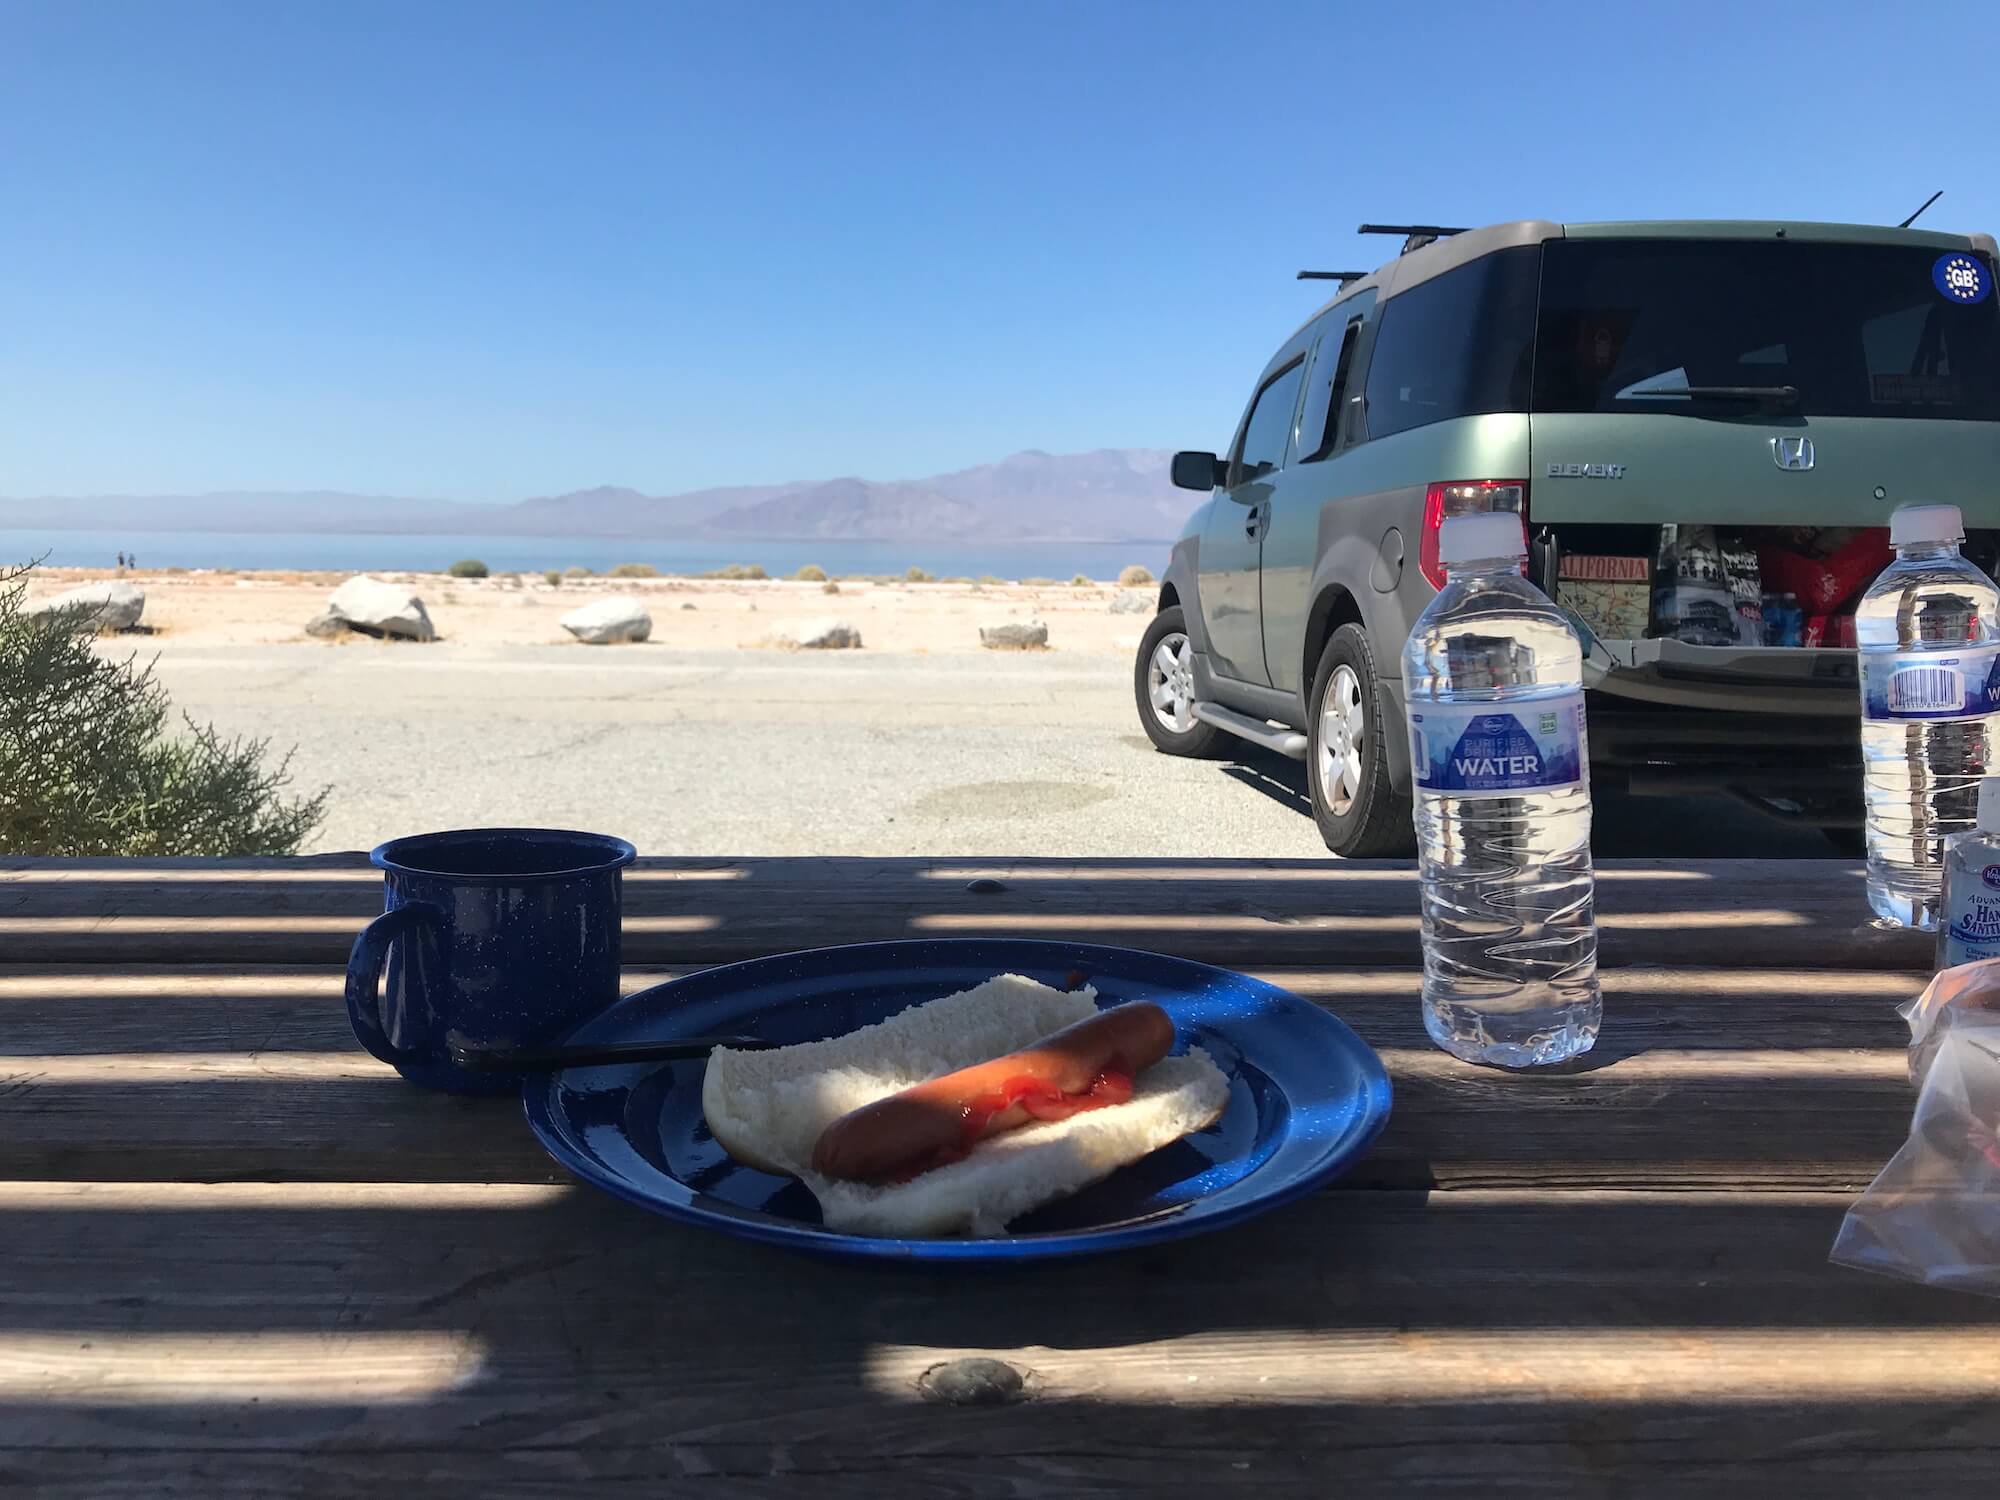 Hotdogs and Aeropress Coffee at Mecca Beach